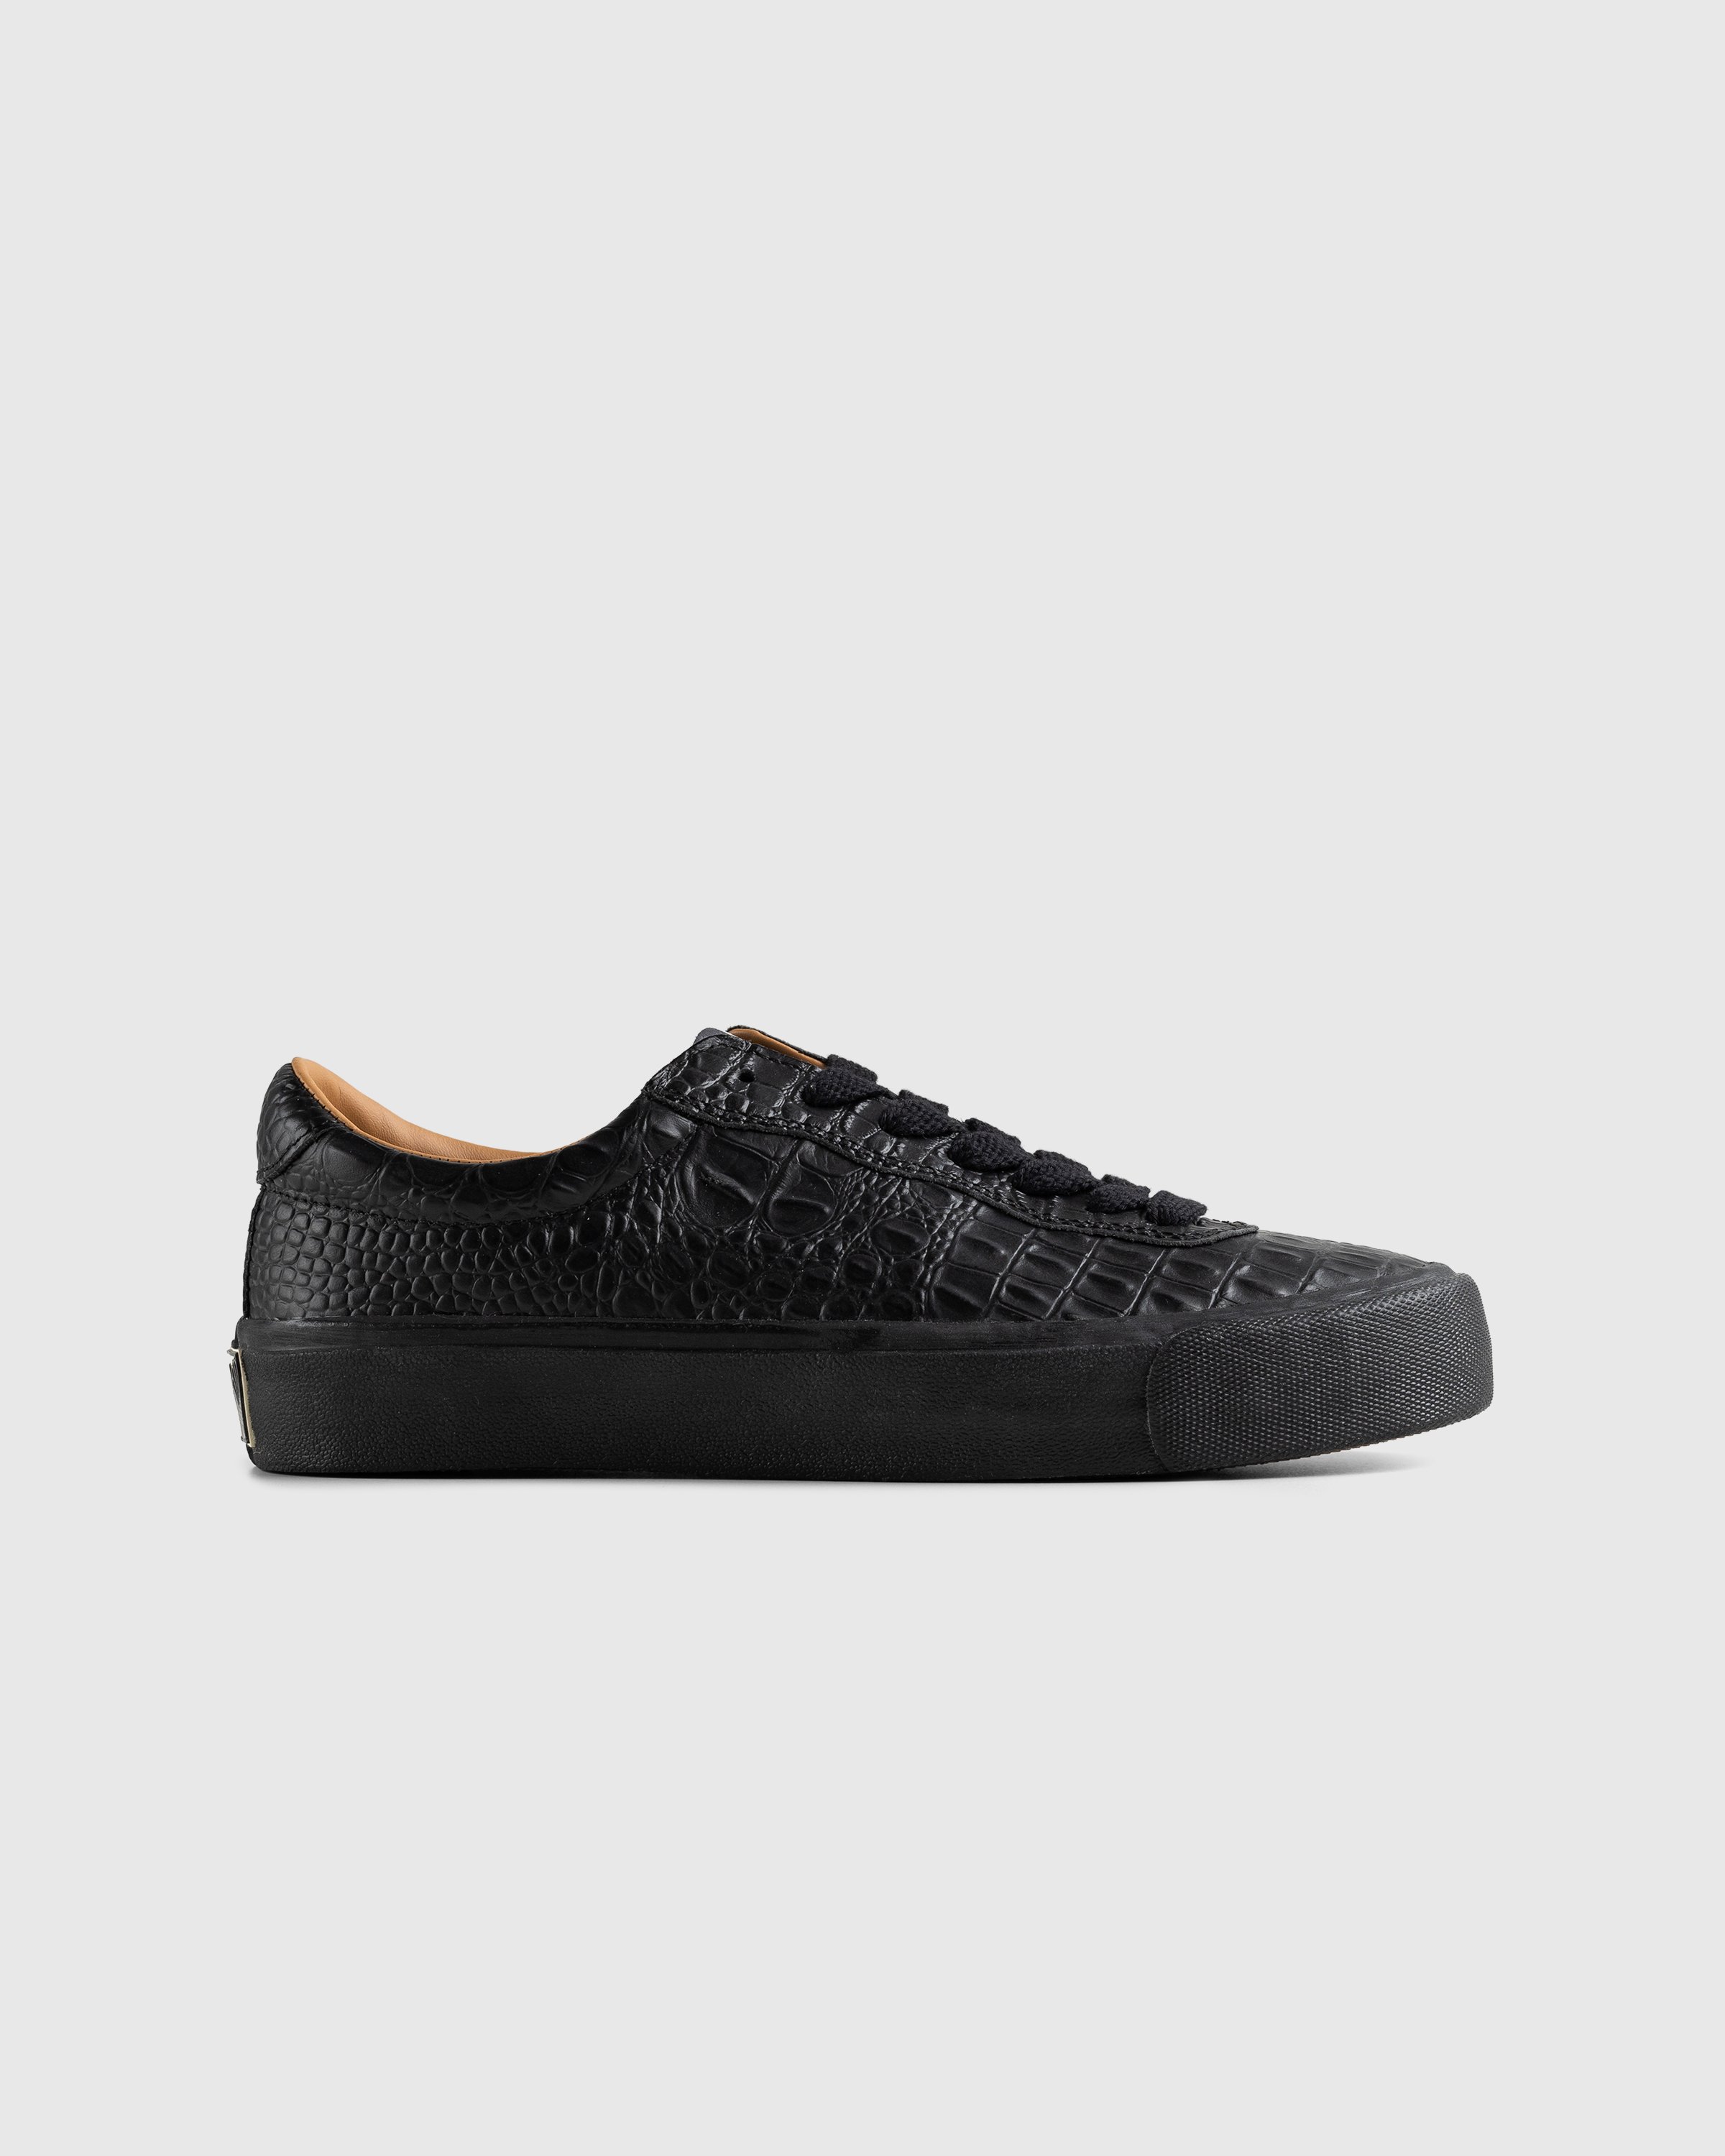 Last Resort AB - VM001-Croc LO Black/Black - Footwear - Black - Image 1